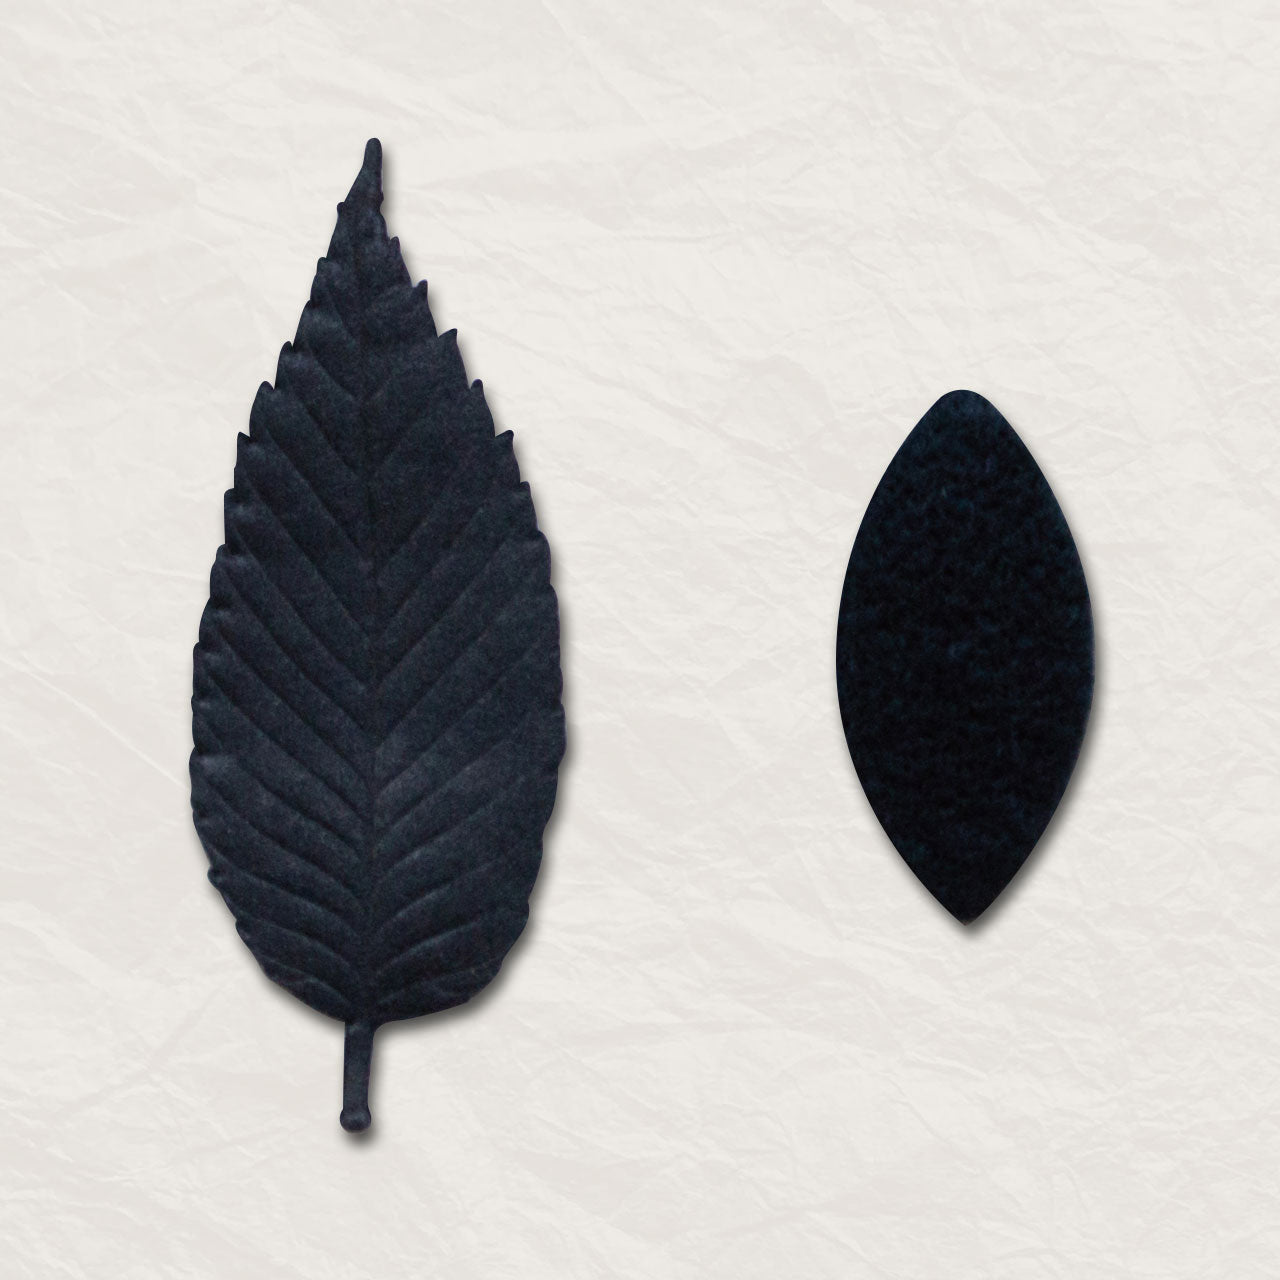 Black incense shaped like leaves